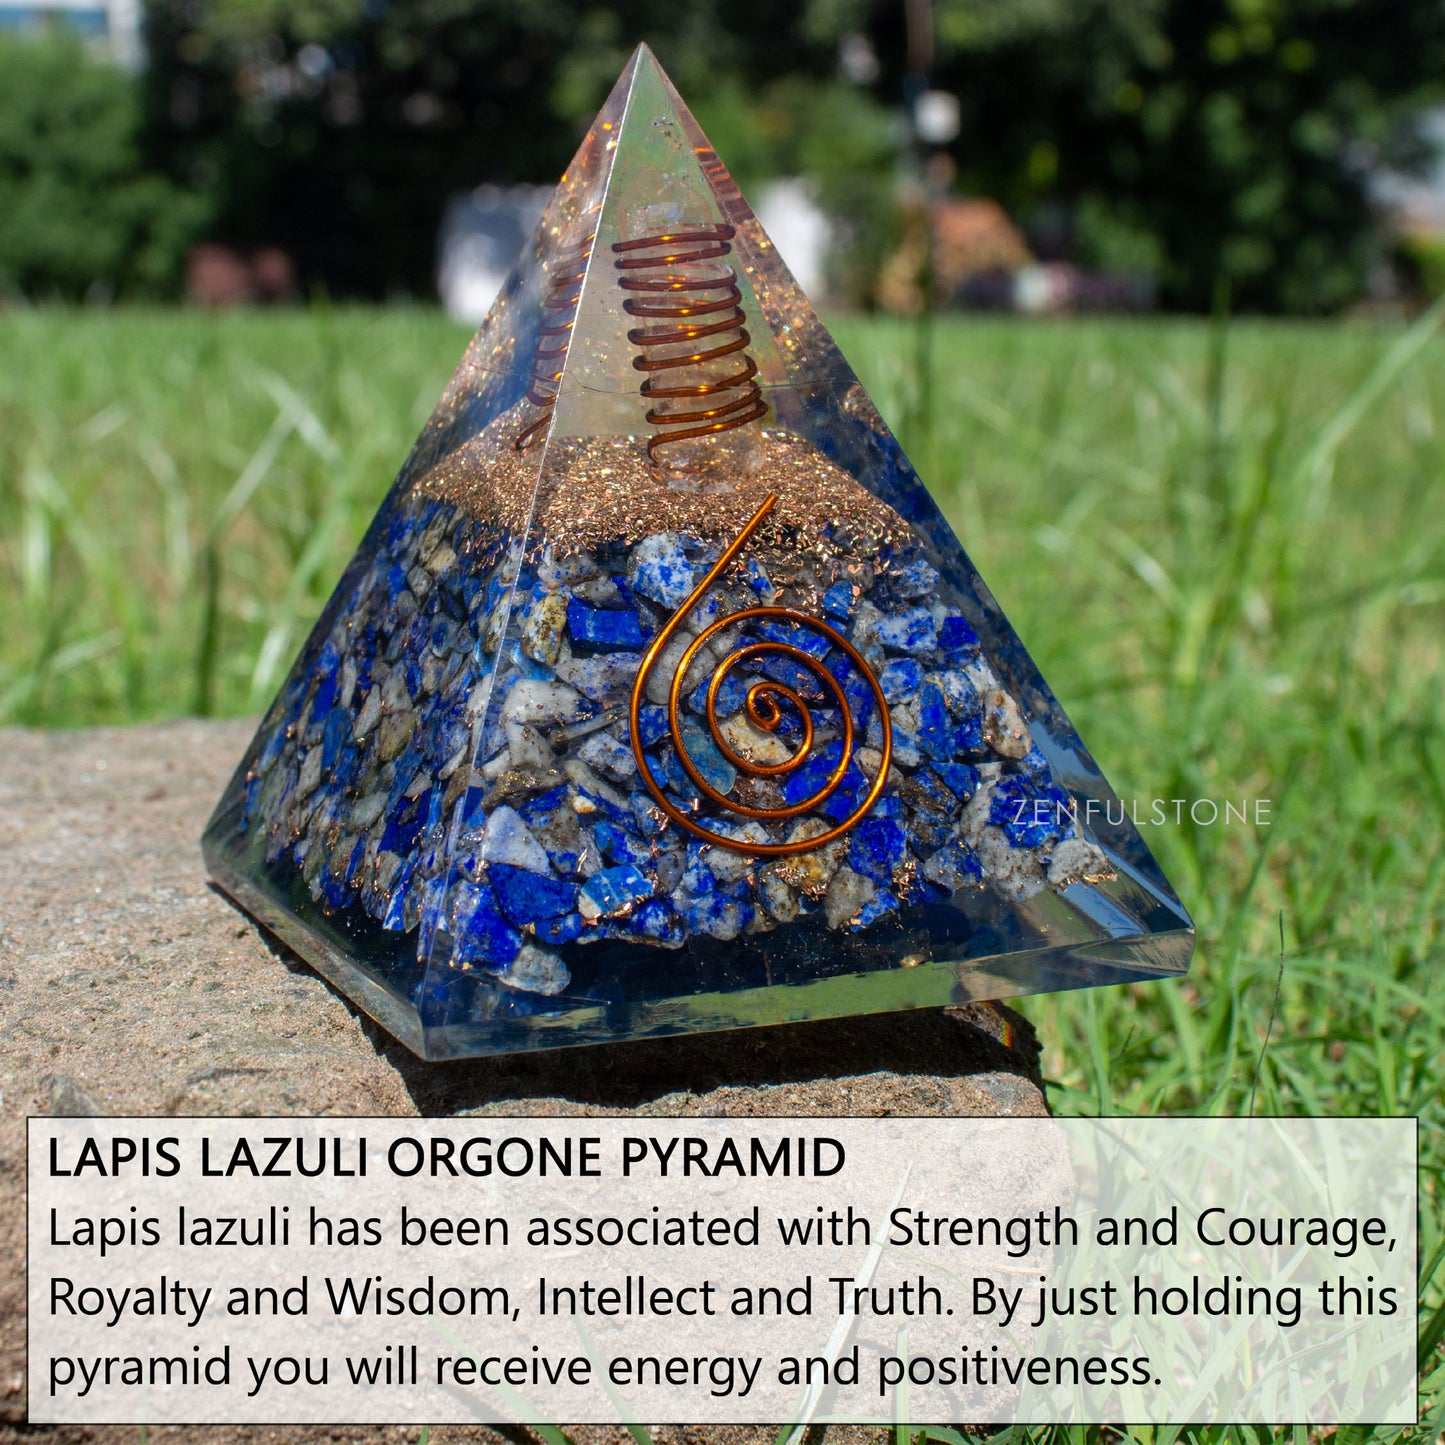 Lapis Lazuli Orgone Pyramid for Wisdom, Harmony, Honest & Self-Awareness